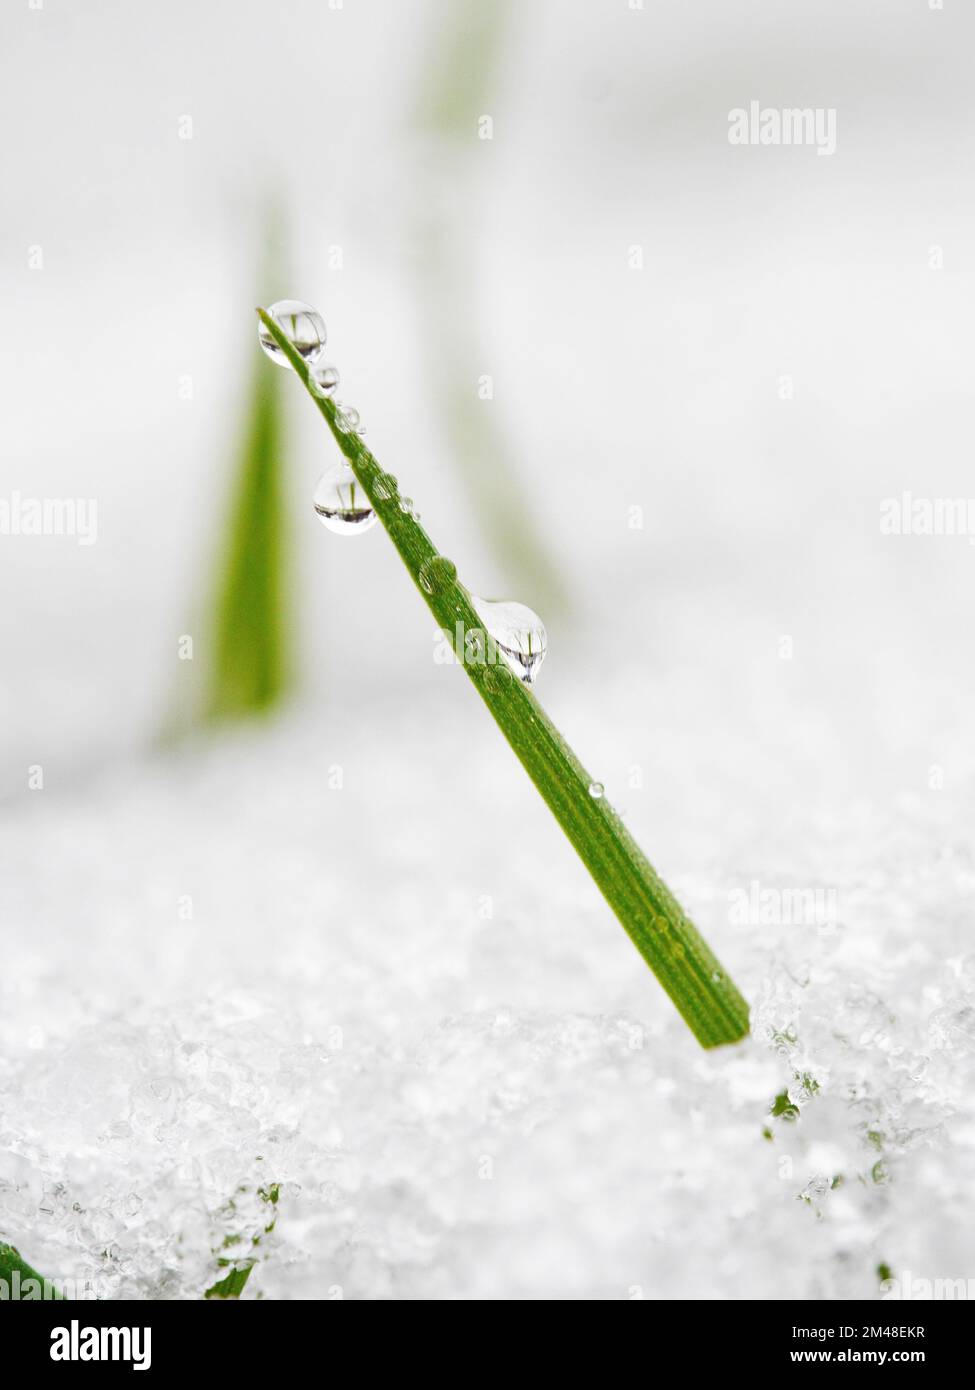 grass blade winter snow drop Stock Photo